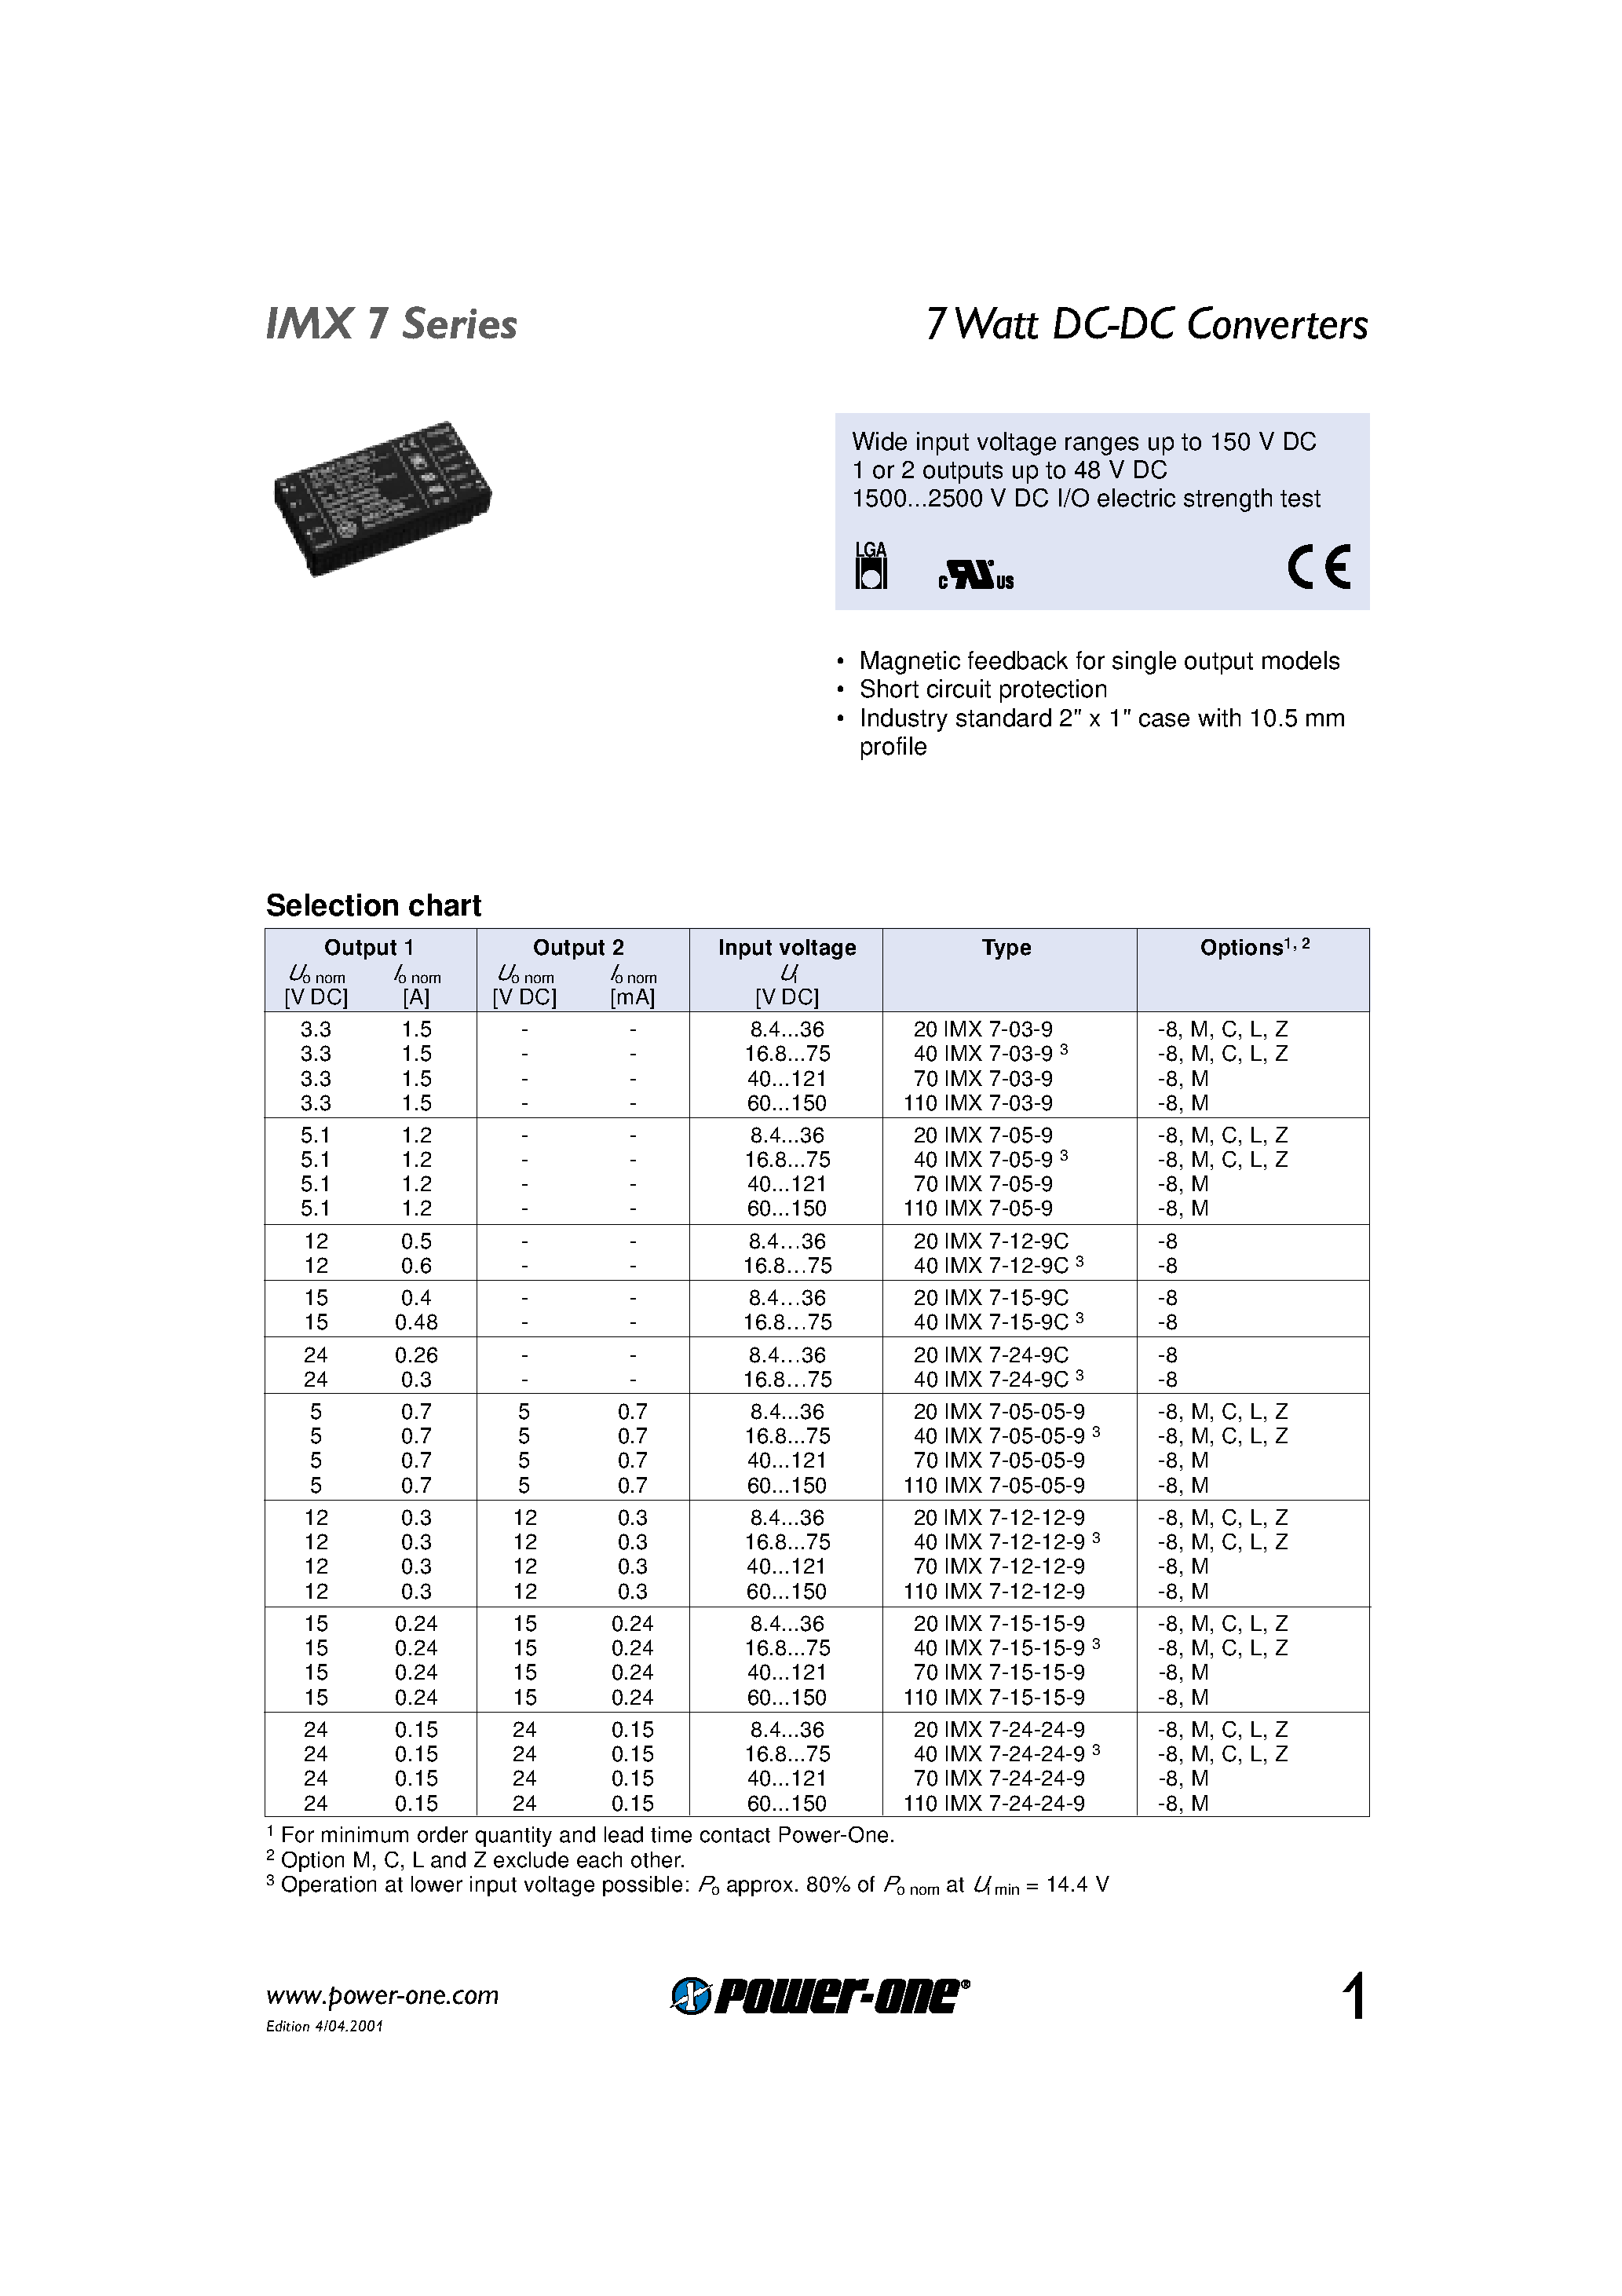 Datasheet 40IMX7-24-24-9 - 7 Watt DC-DC Converters page 1